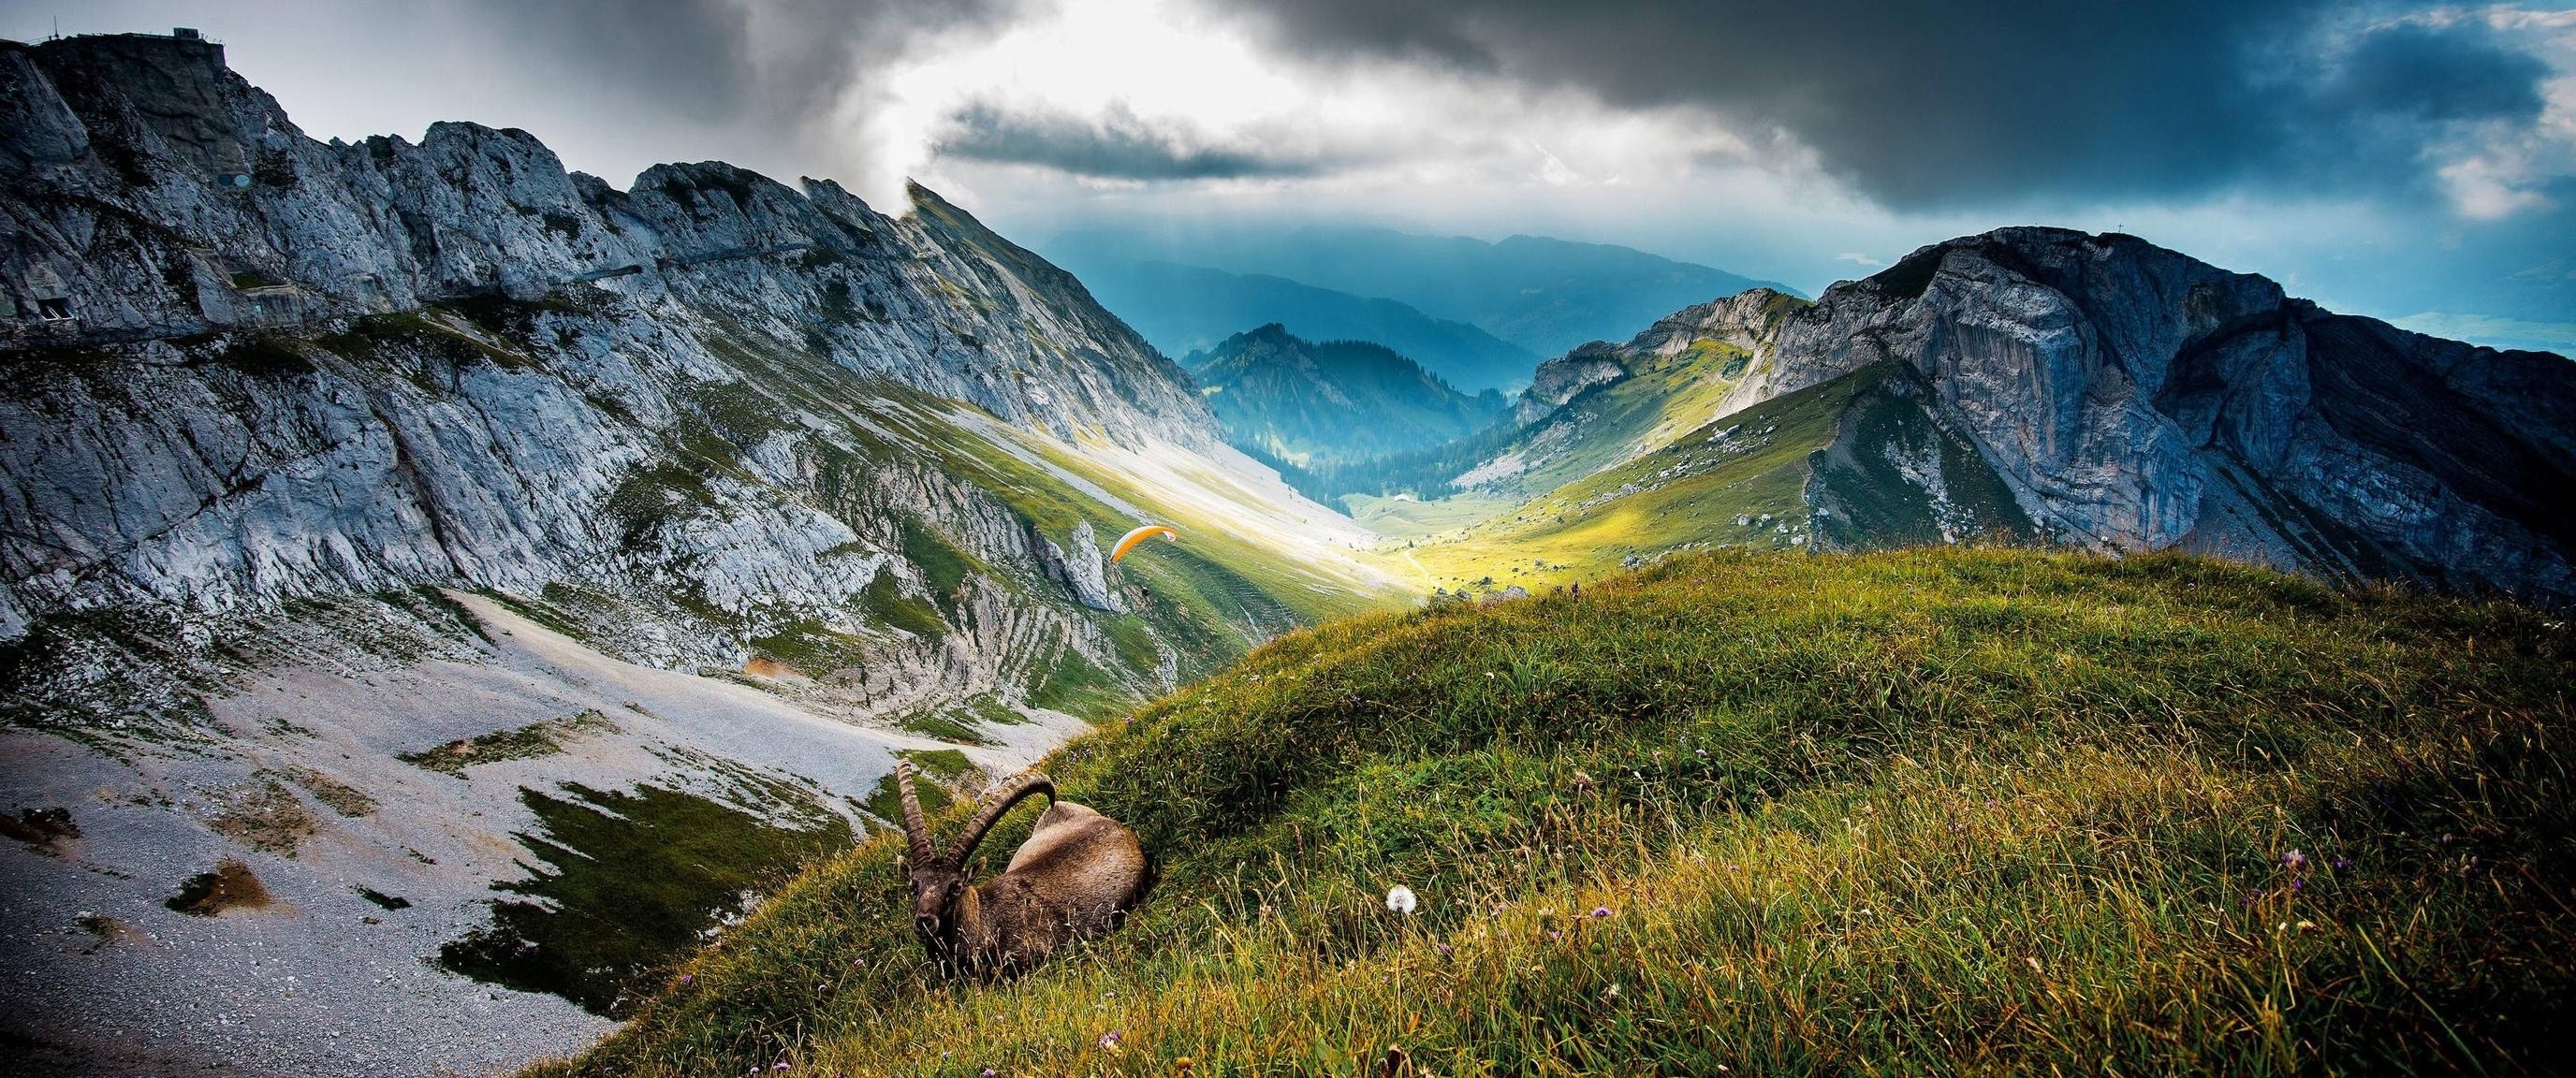 Mount Pilatus, Nature wallpapers, HD backgrounds, Mobile and desktop, 2760x1160 Dual Screen Desktop